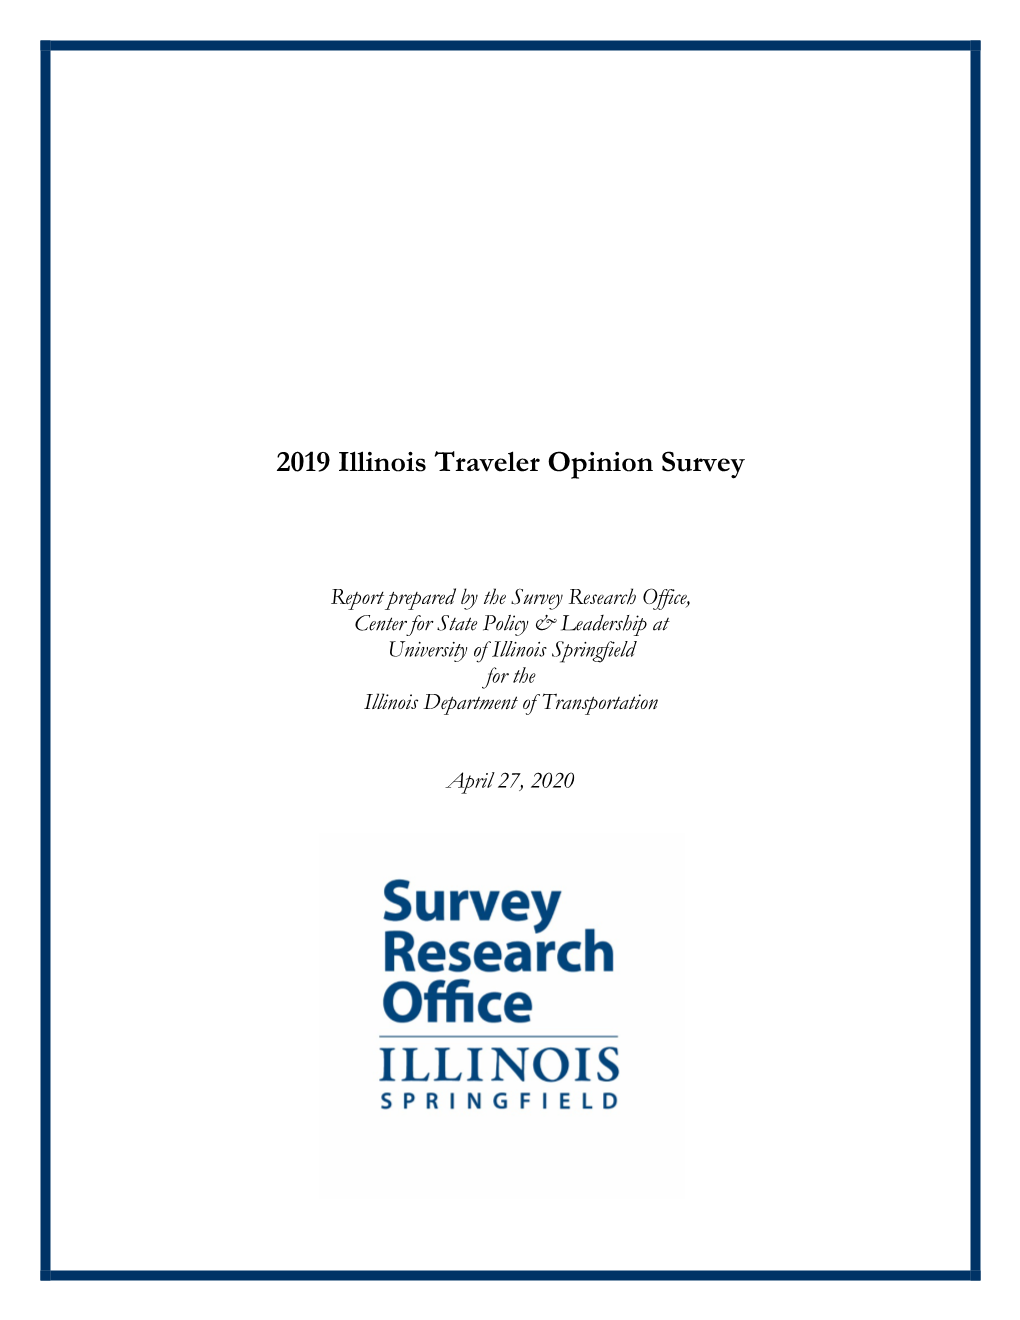 2019 Traveler Opinion Survey Has Three Items Regarding Police Enforcement Campaigns